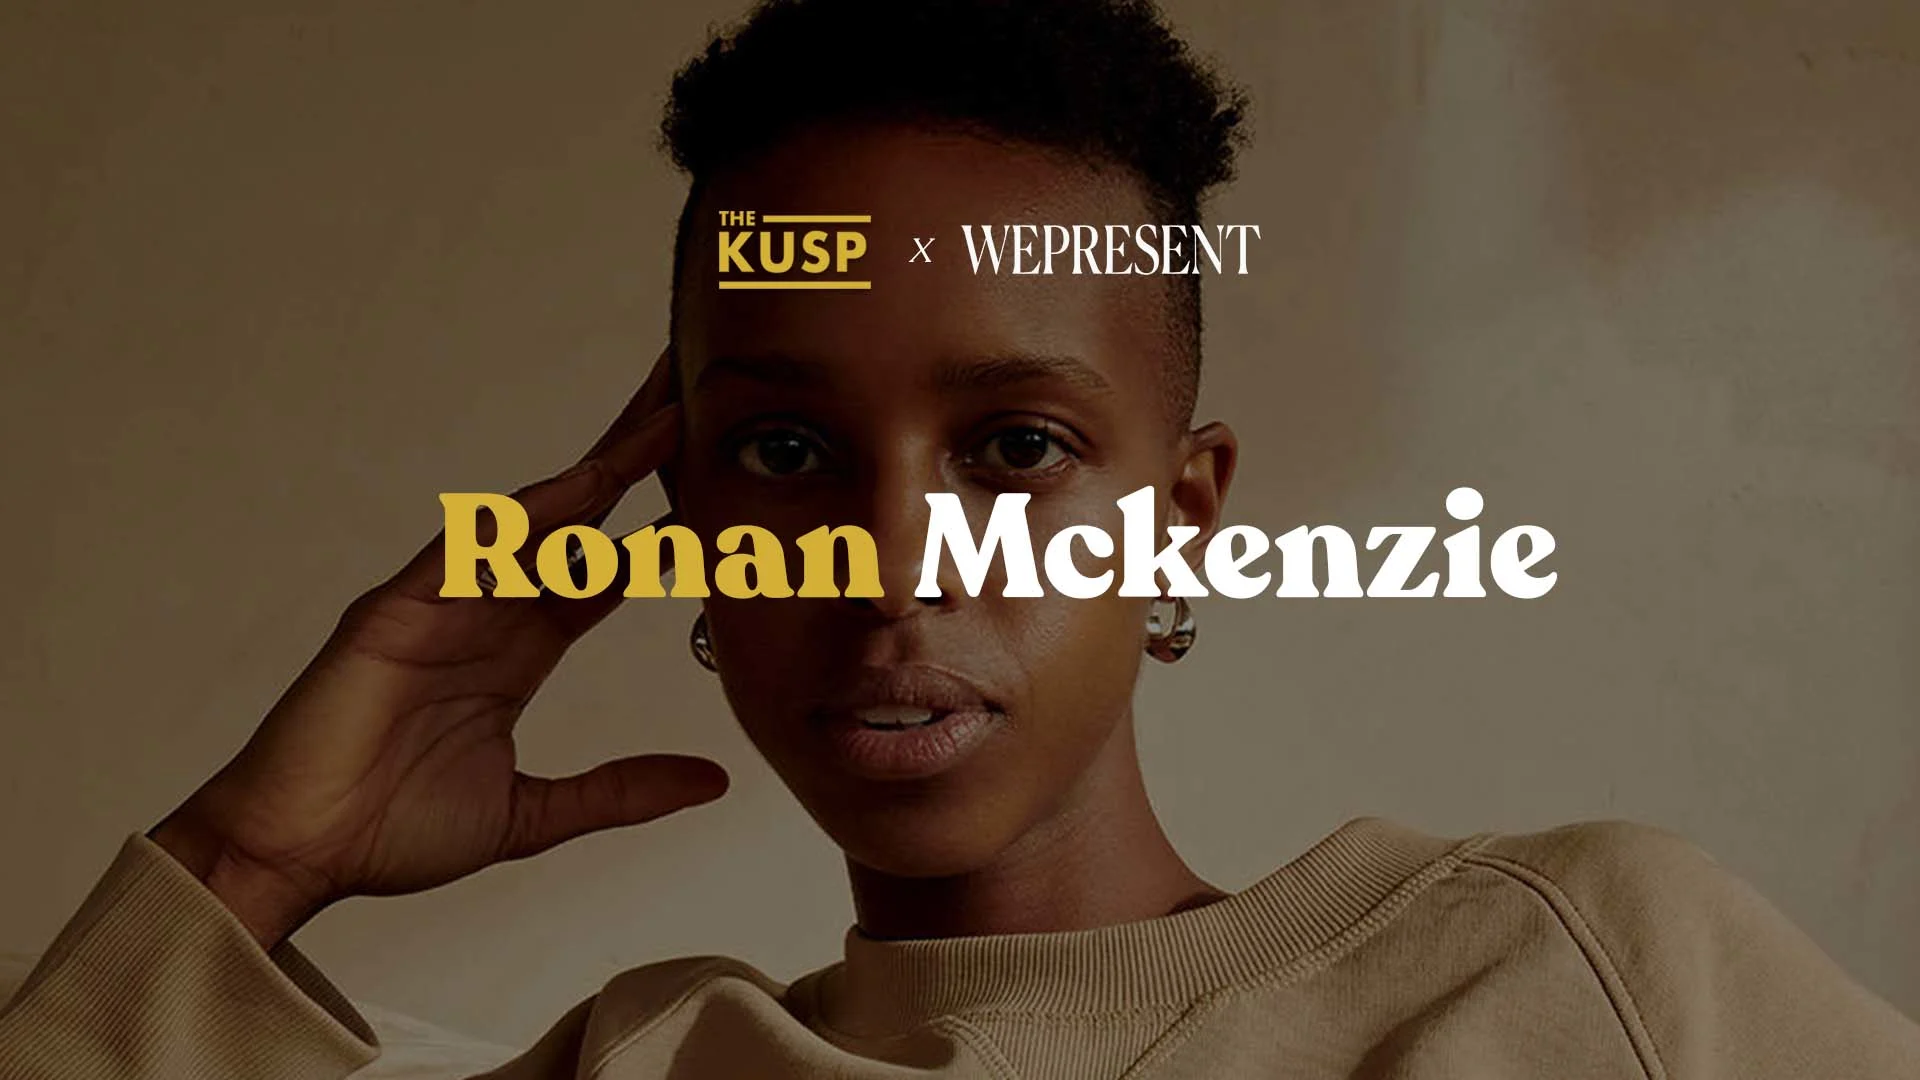 Cover Image -  The Kusp x Ronan Mckenzie - Event